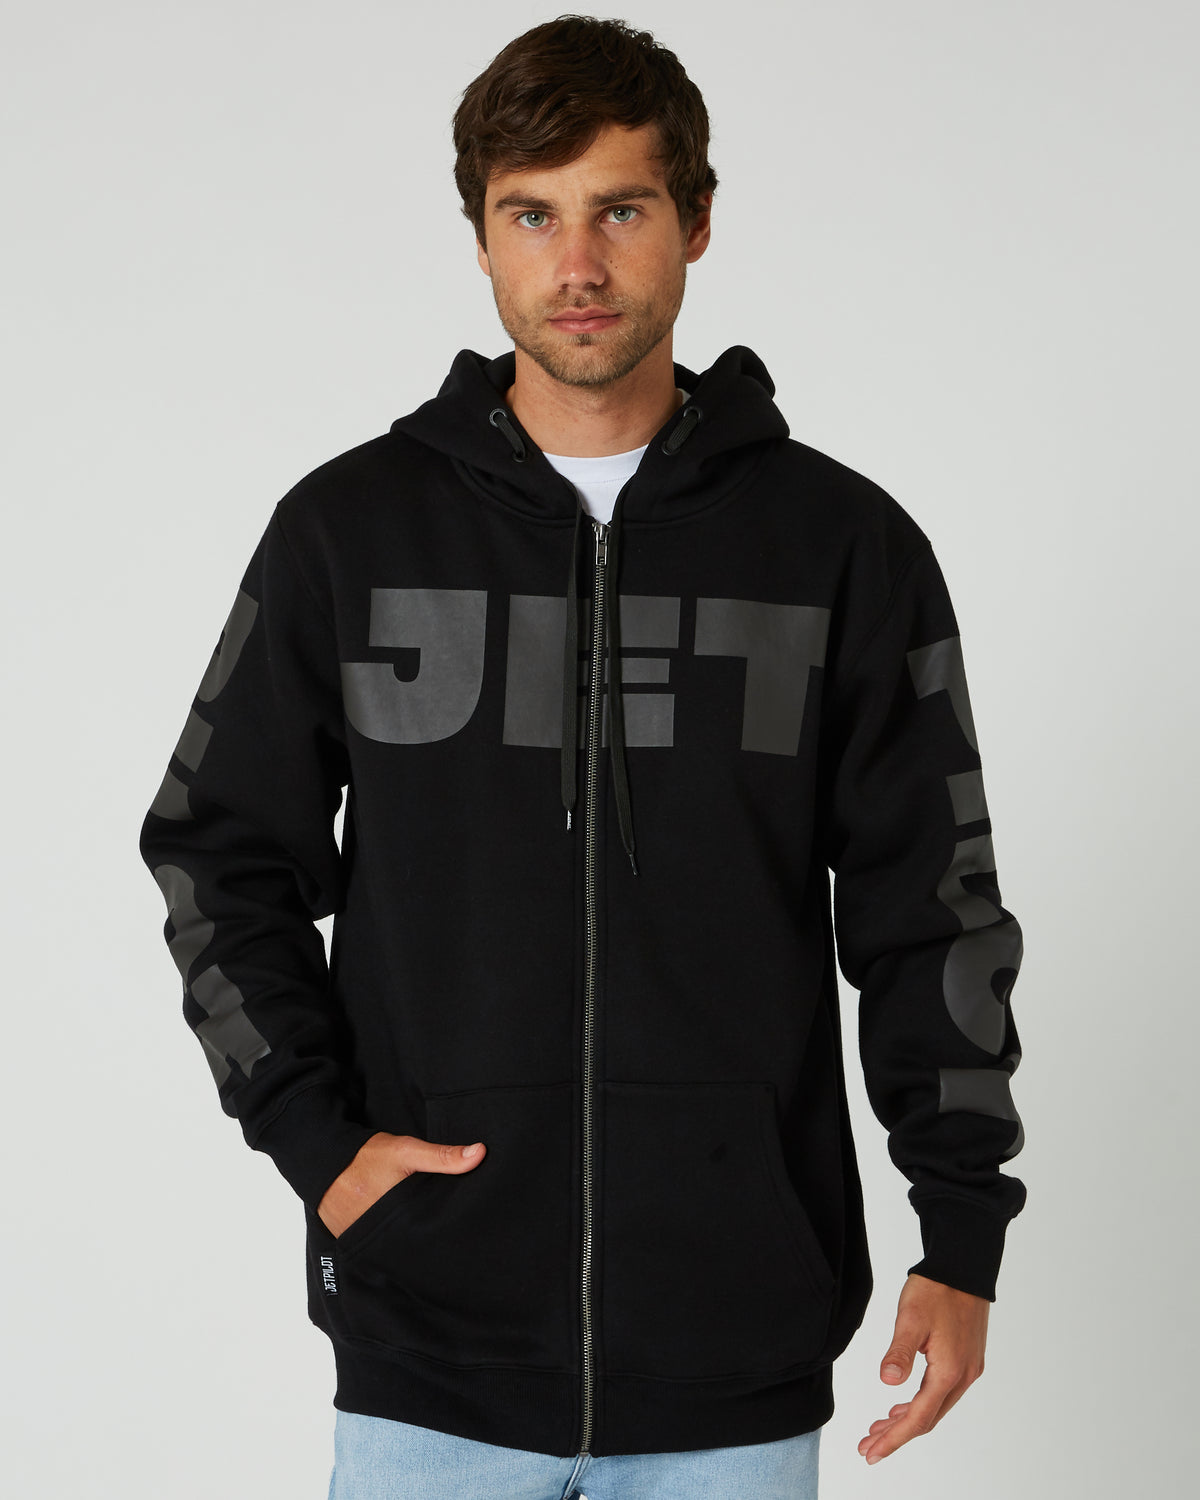 Shop Mens Hoodies, Jumpers & Sweatshirts - Jetpilot